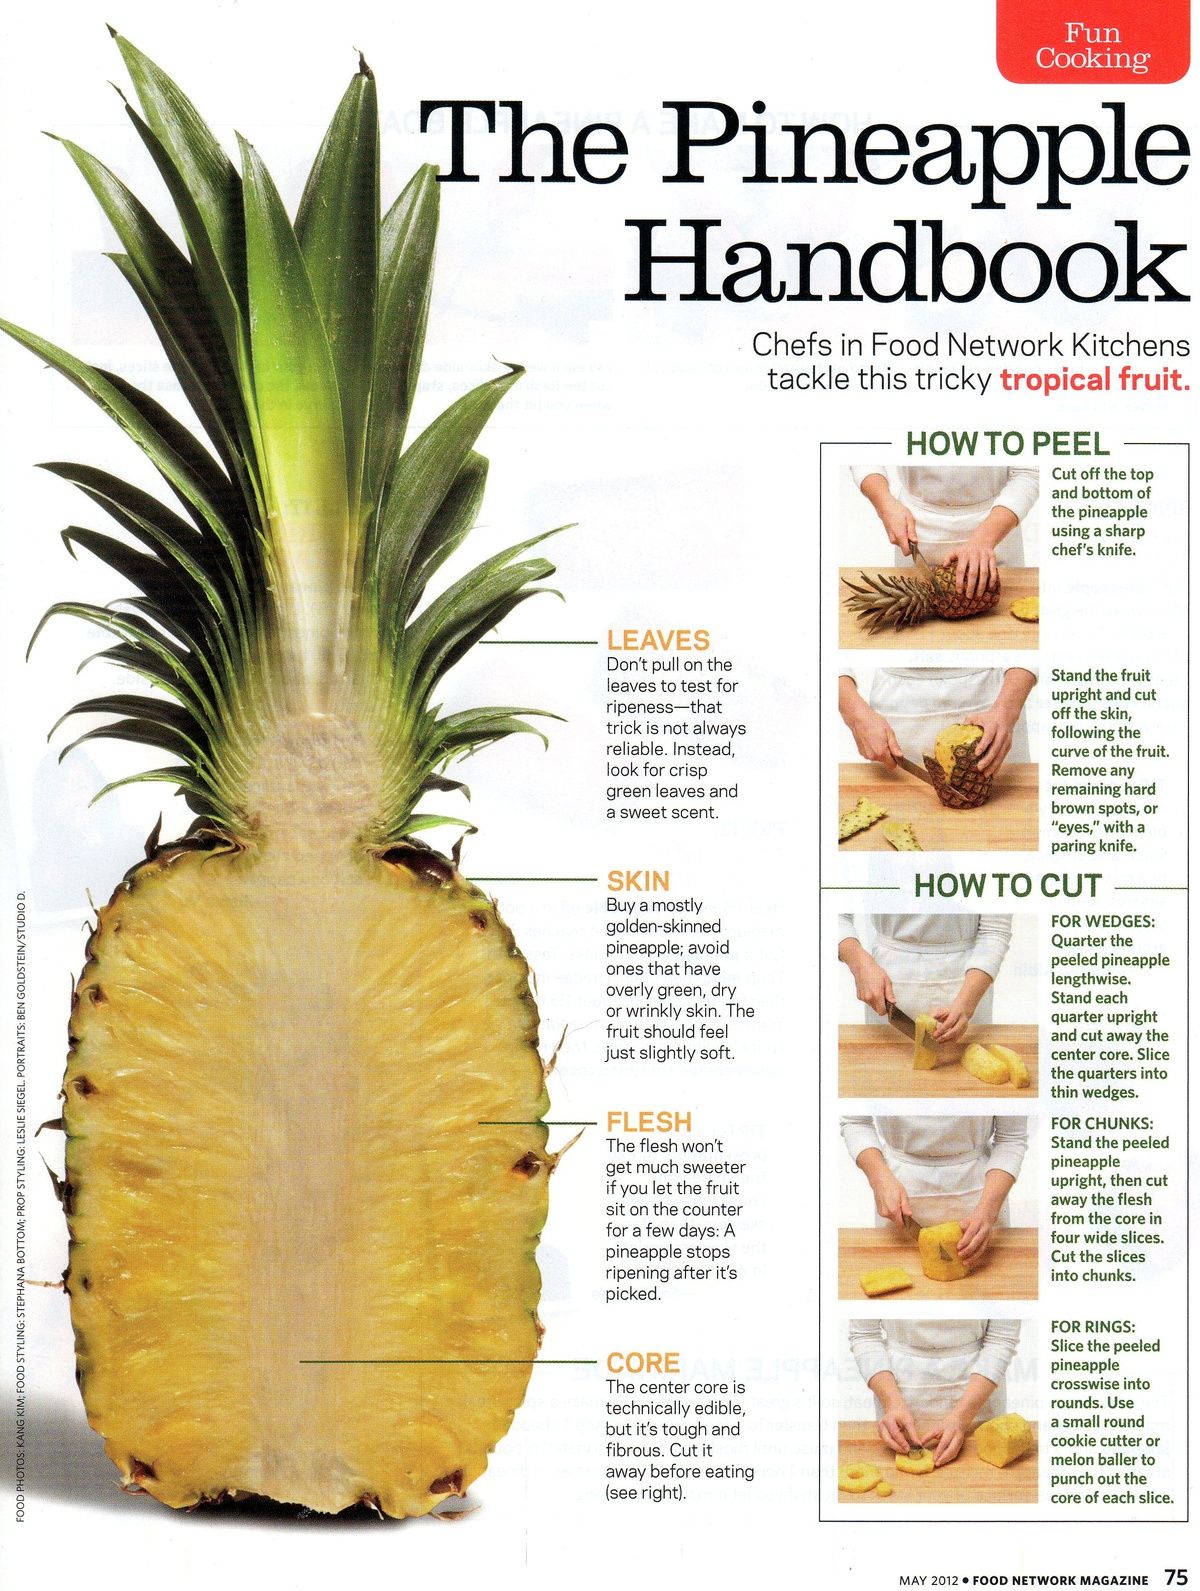 The Pineapple Handbook